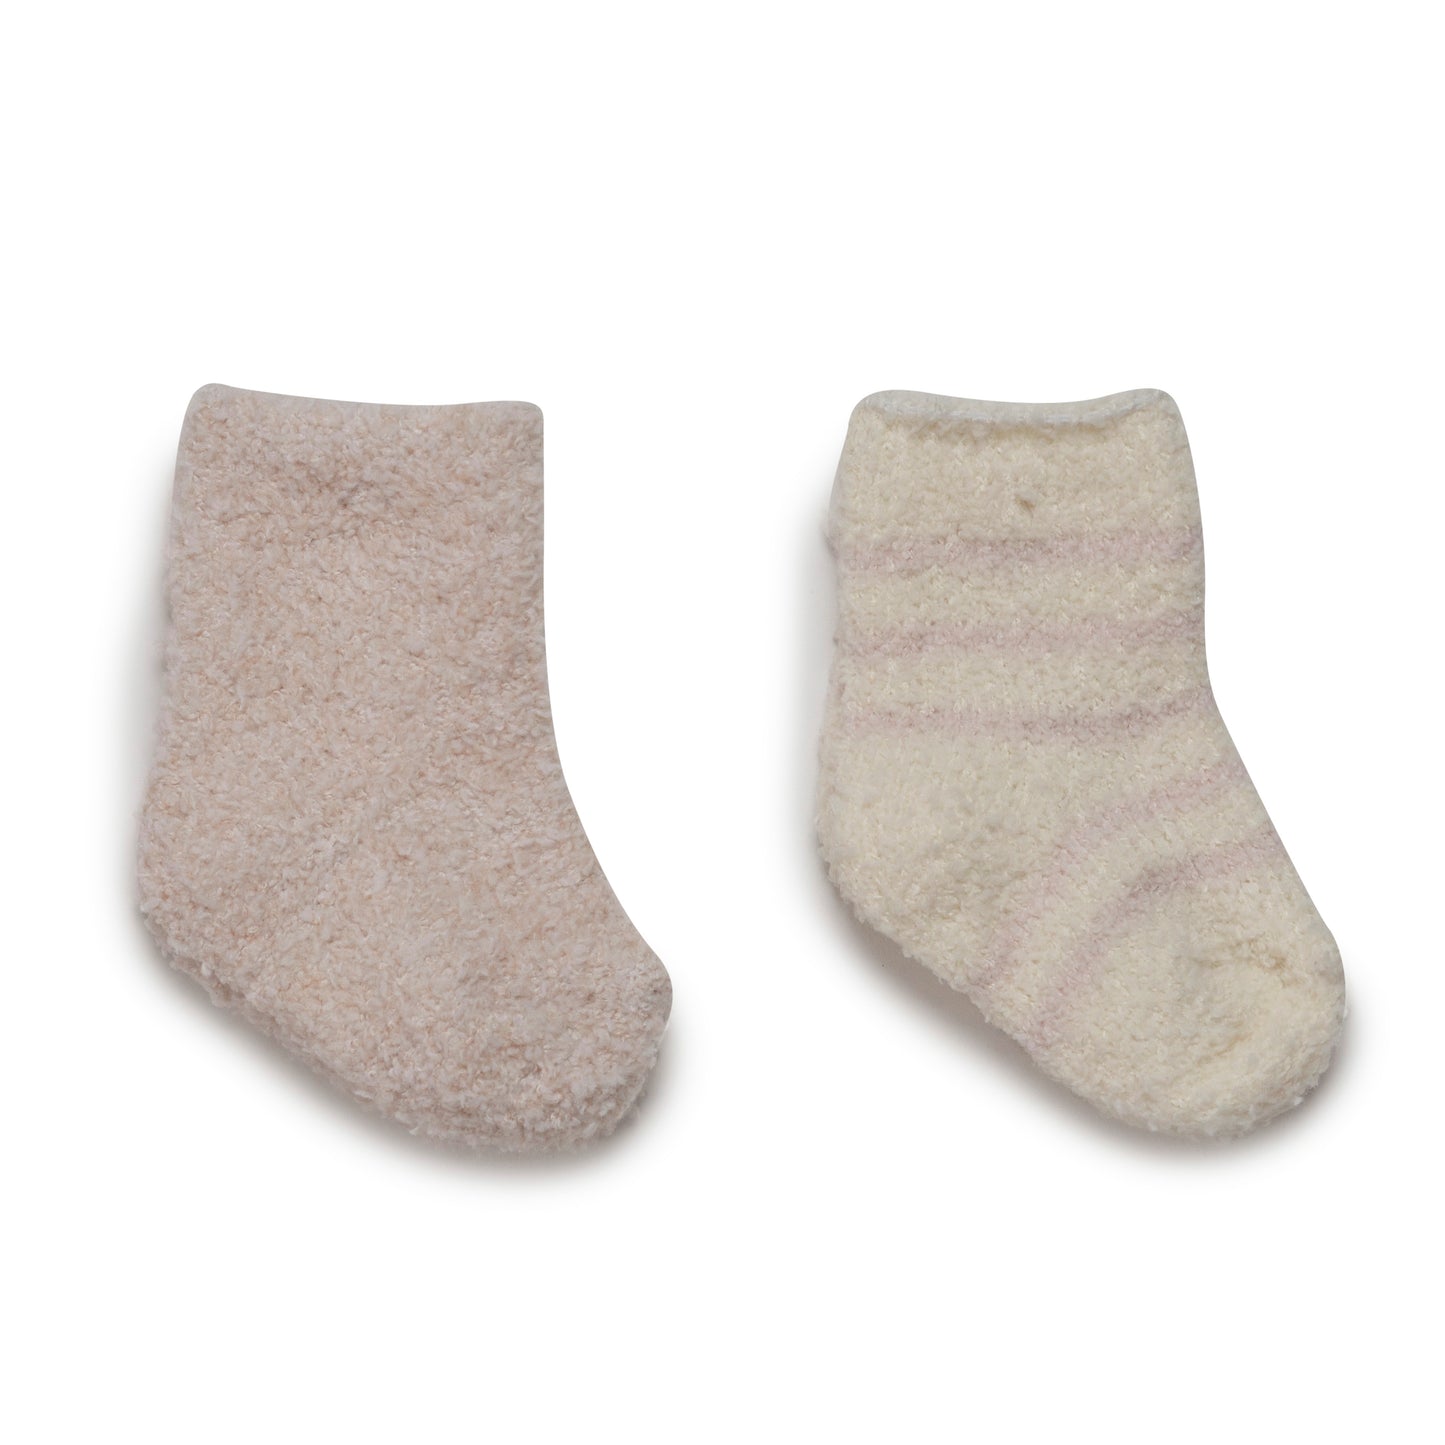 Barefoot Dreams Cozychic Knit Infant Socks - Set/2